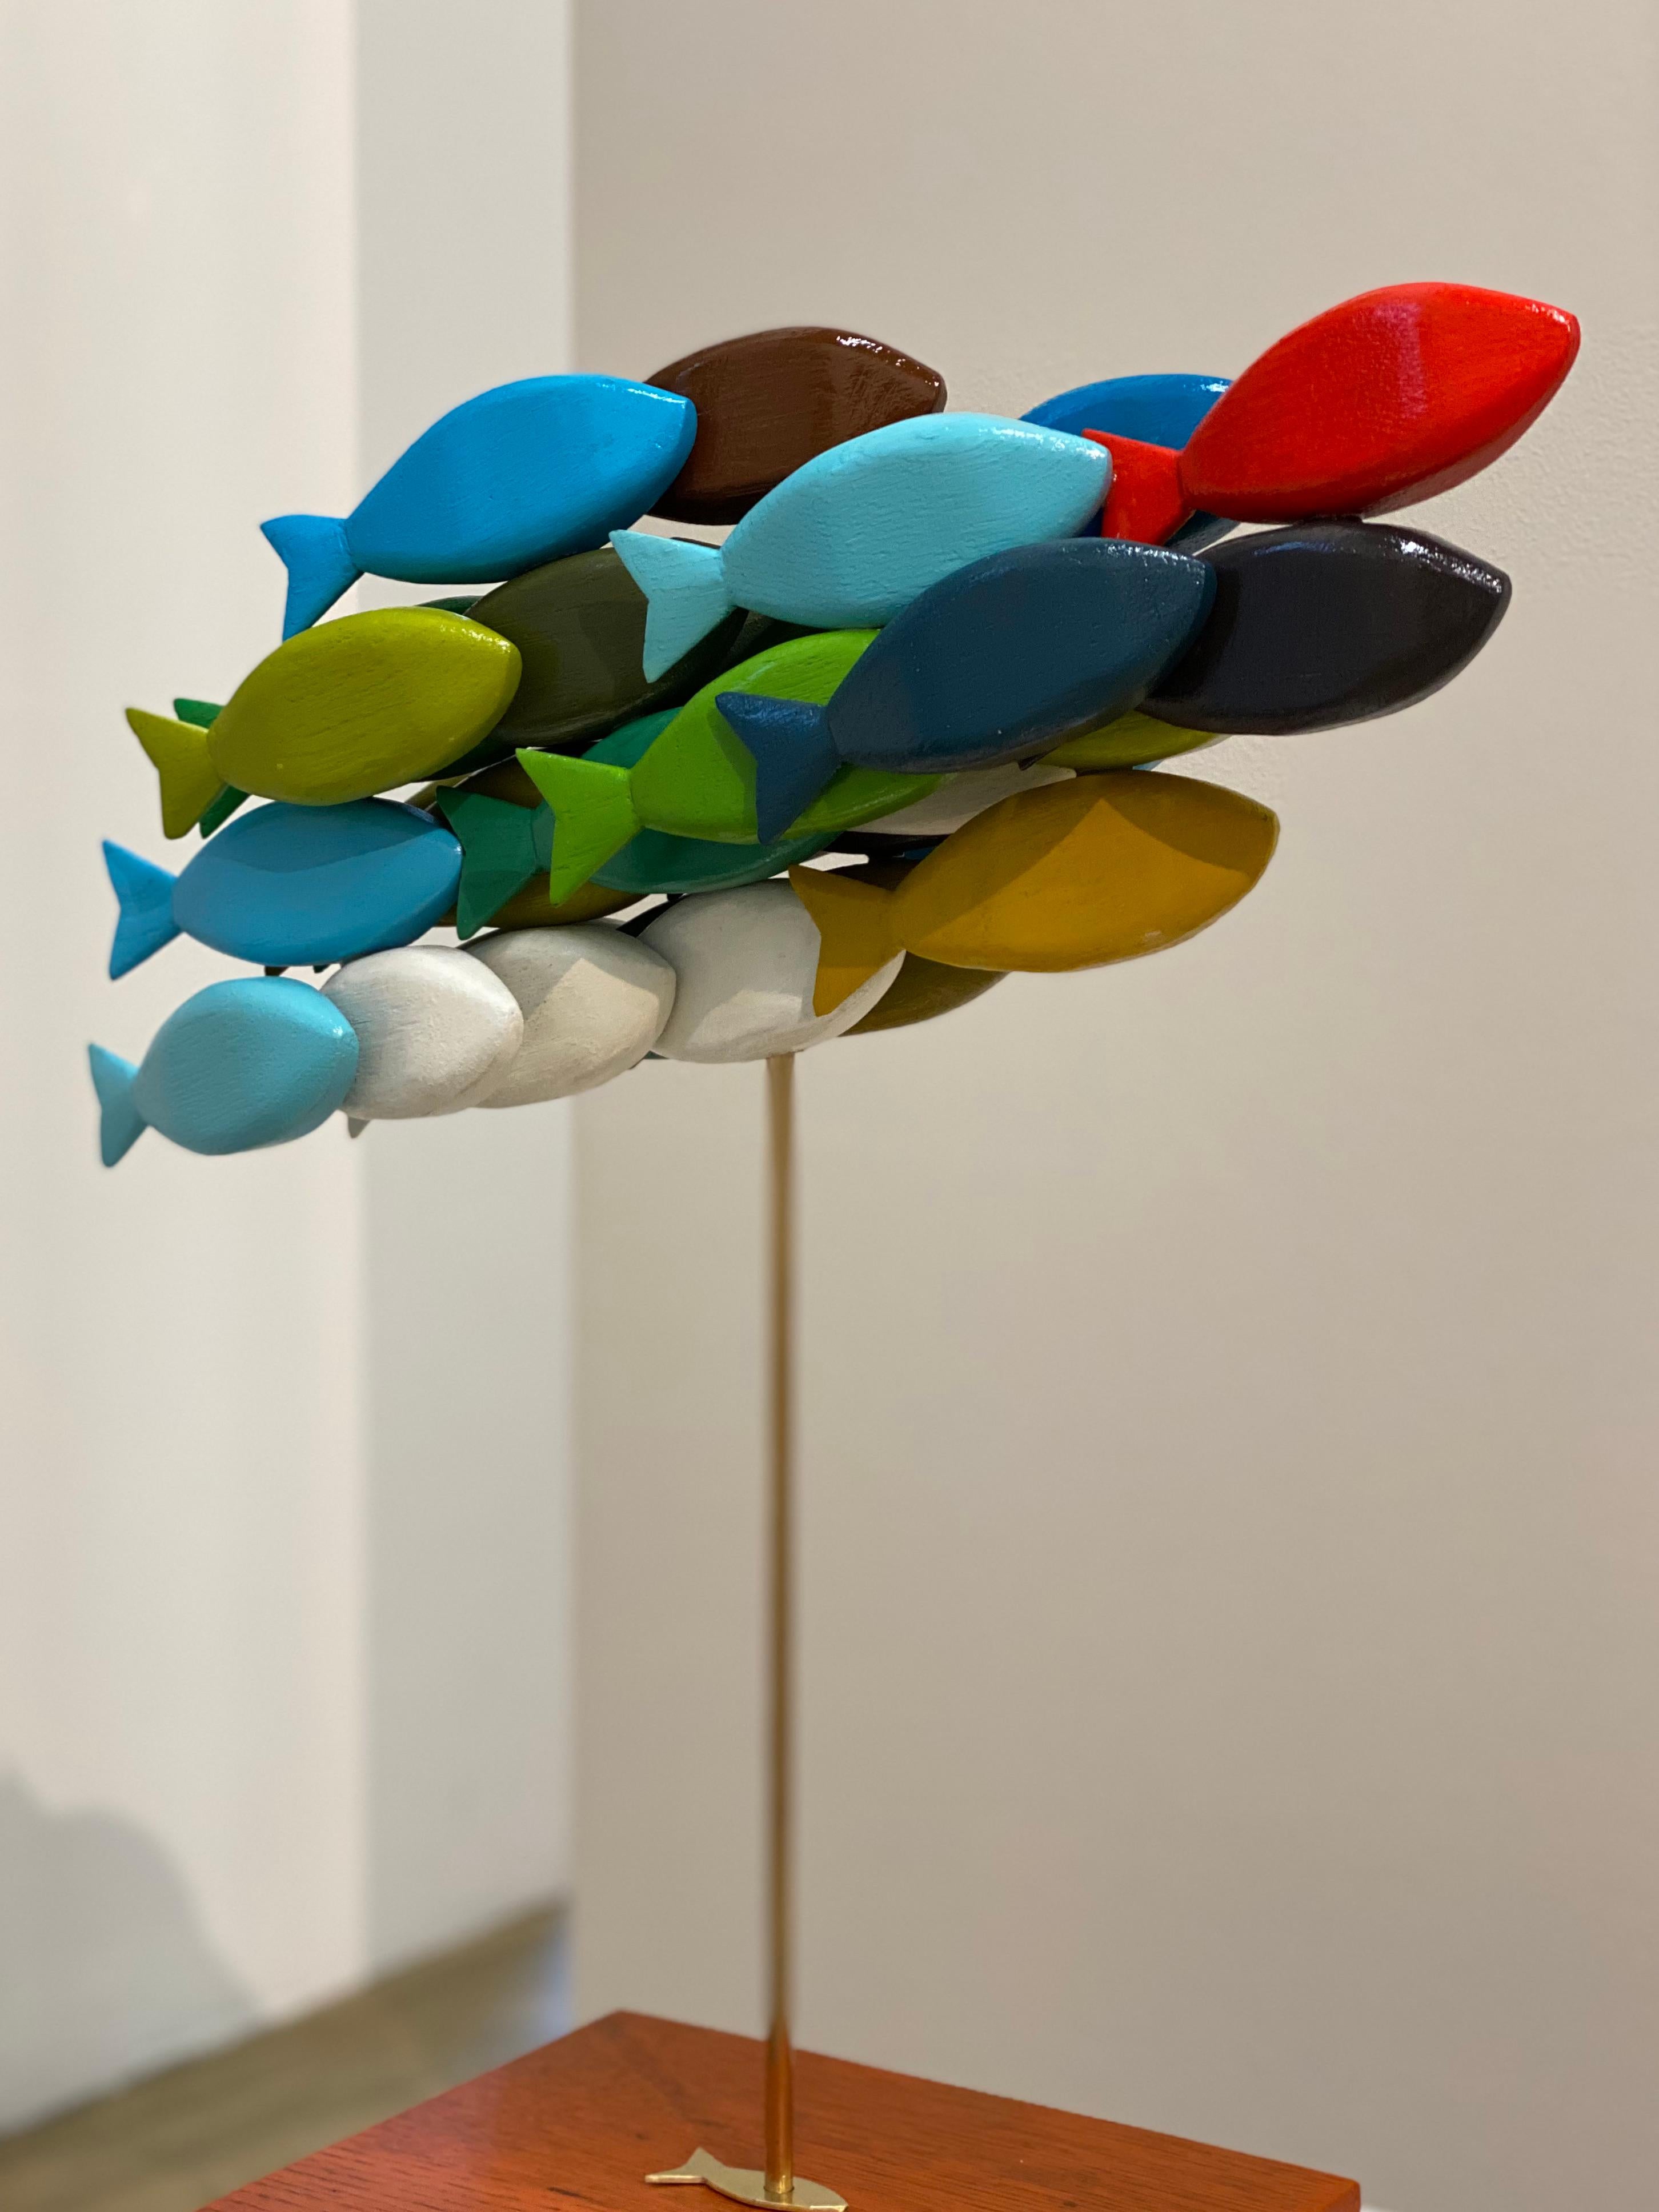 Jos de Wit Figurative Sculpture - School of Fish- 21st Century Contemporary Wooden Colorful Sculpture of Fish